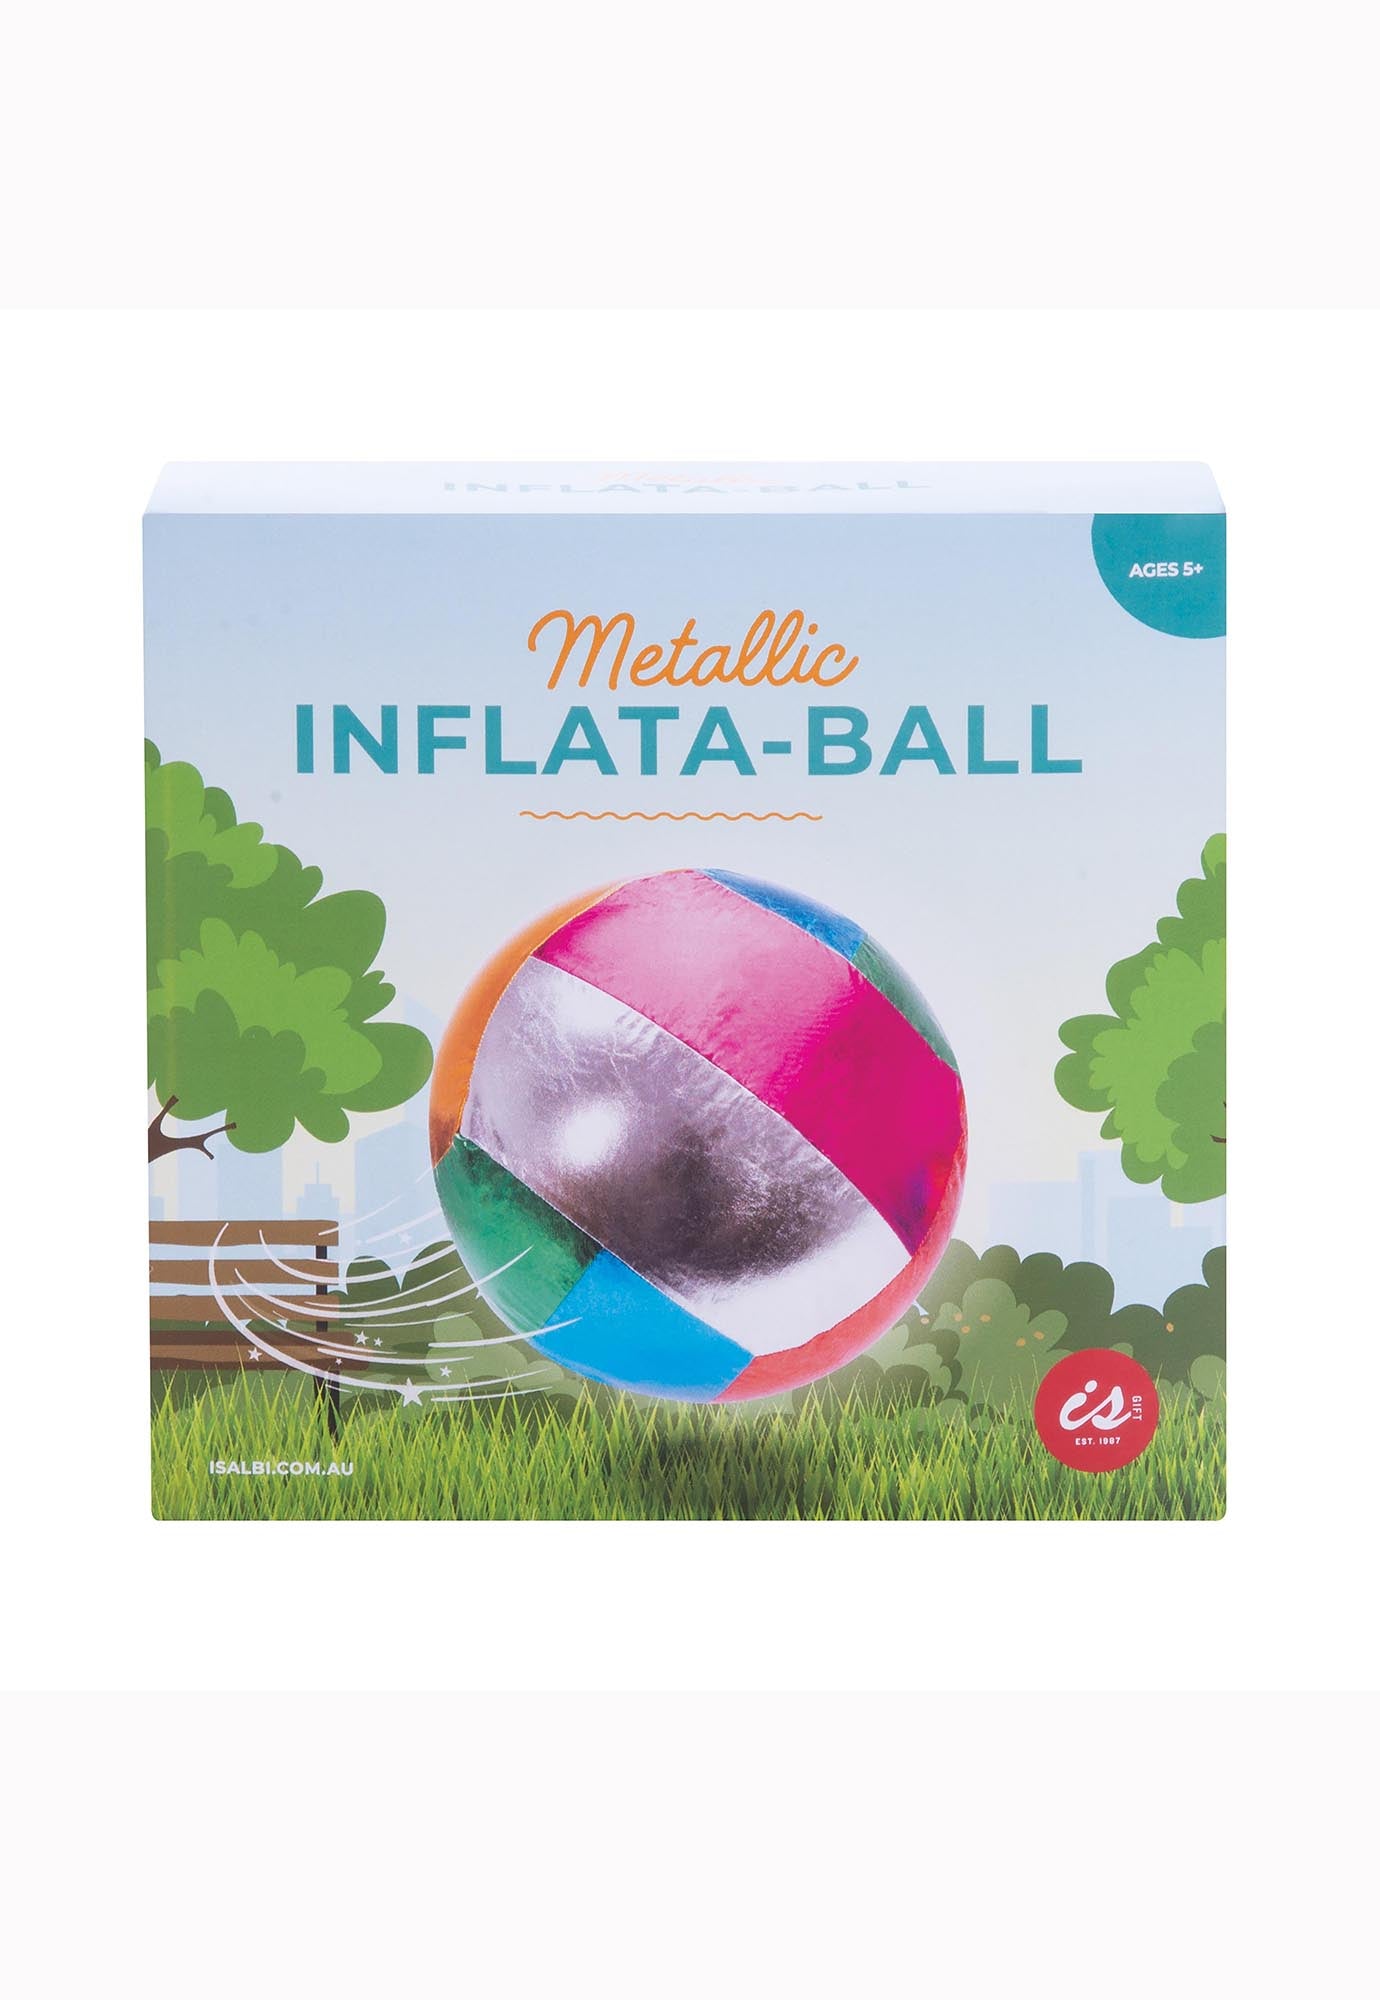 metallic inflata-ball